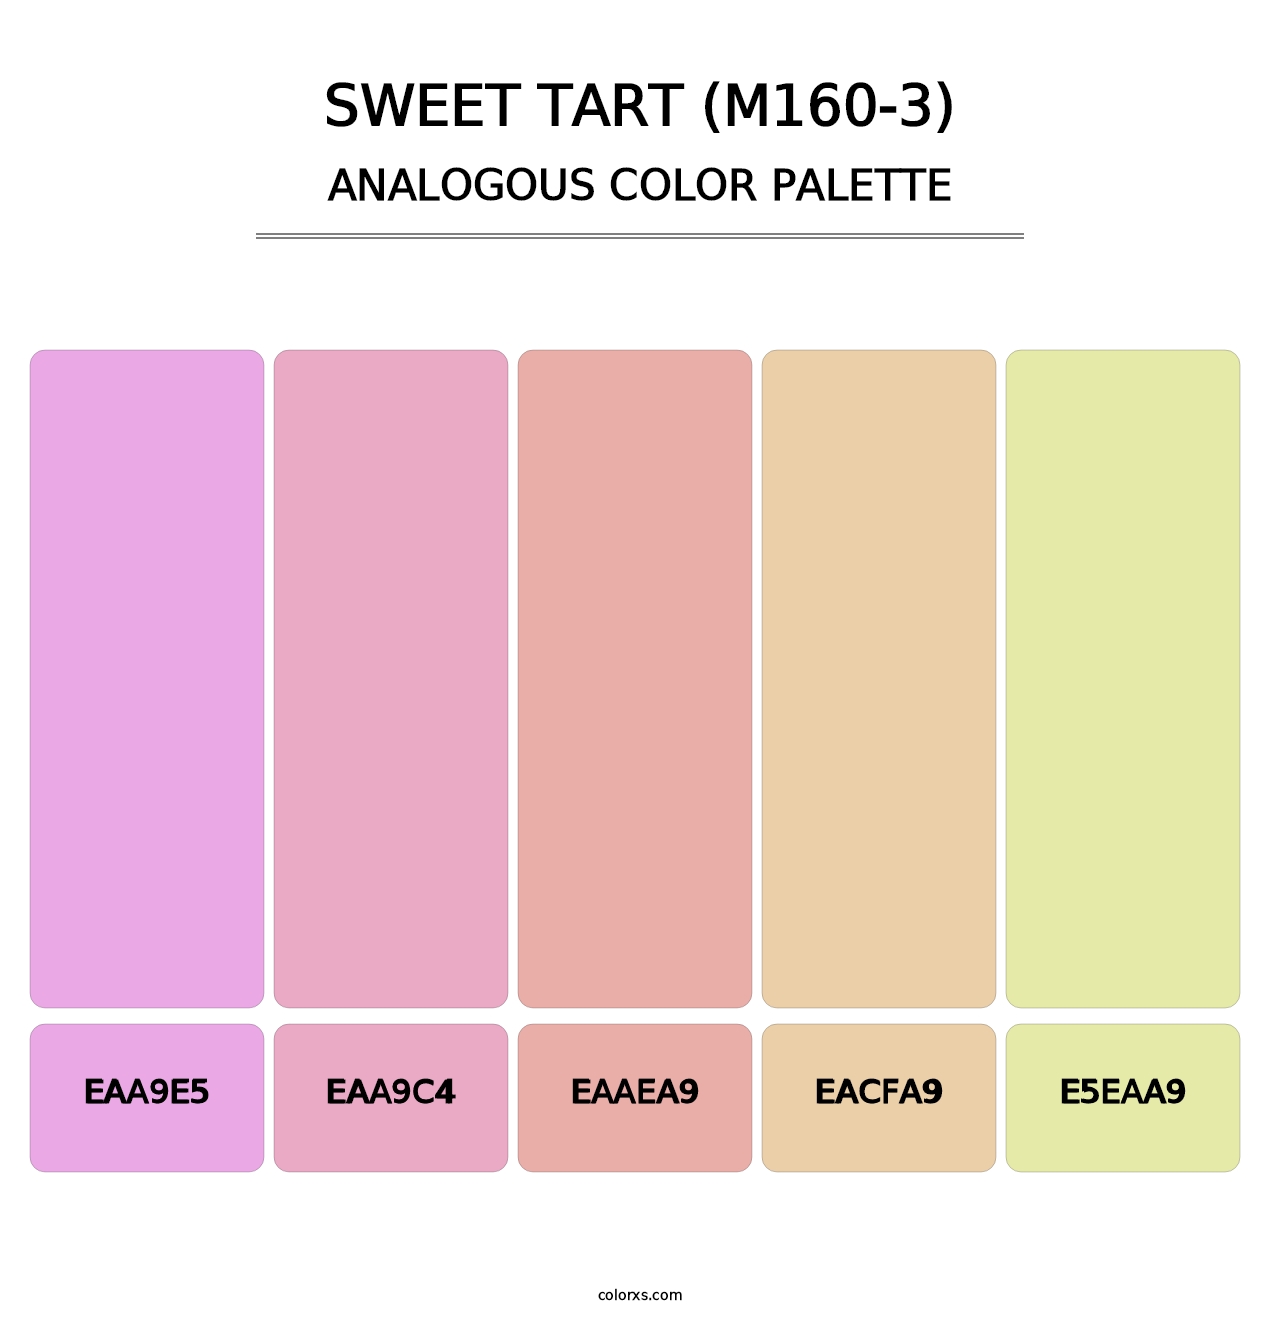 Sweet Tart (M160-3) - Analogous Color Palette